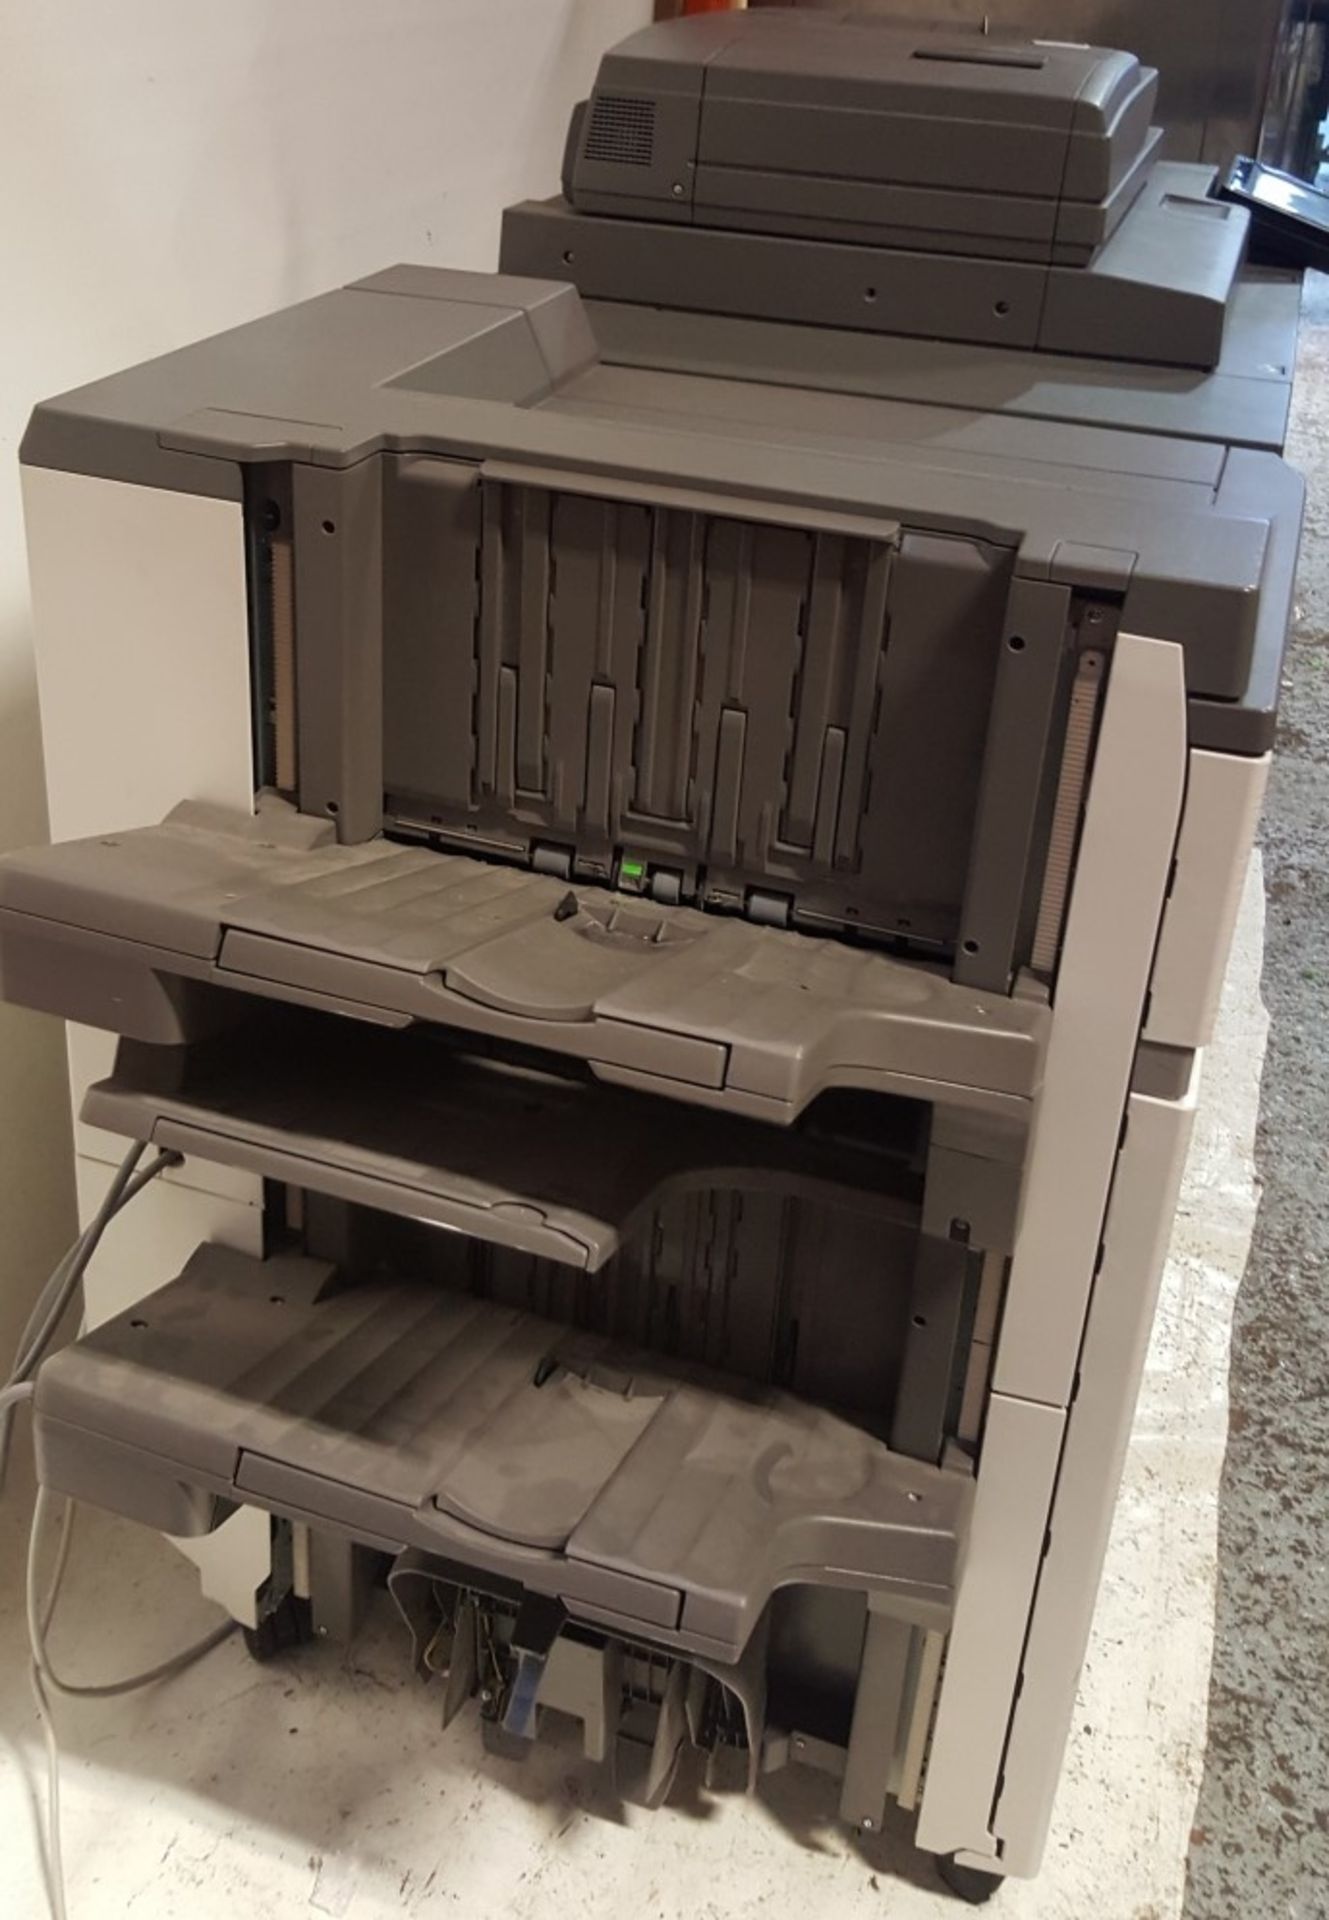 1 x Sharp MX6240N Office Photocopier Printer With Saddle Stitch Finisher & Curl Correction Unit - - Image 6 of 9